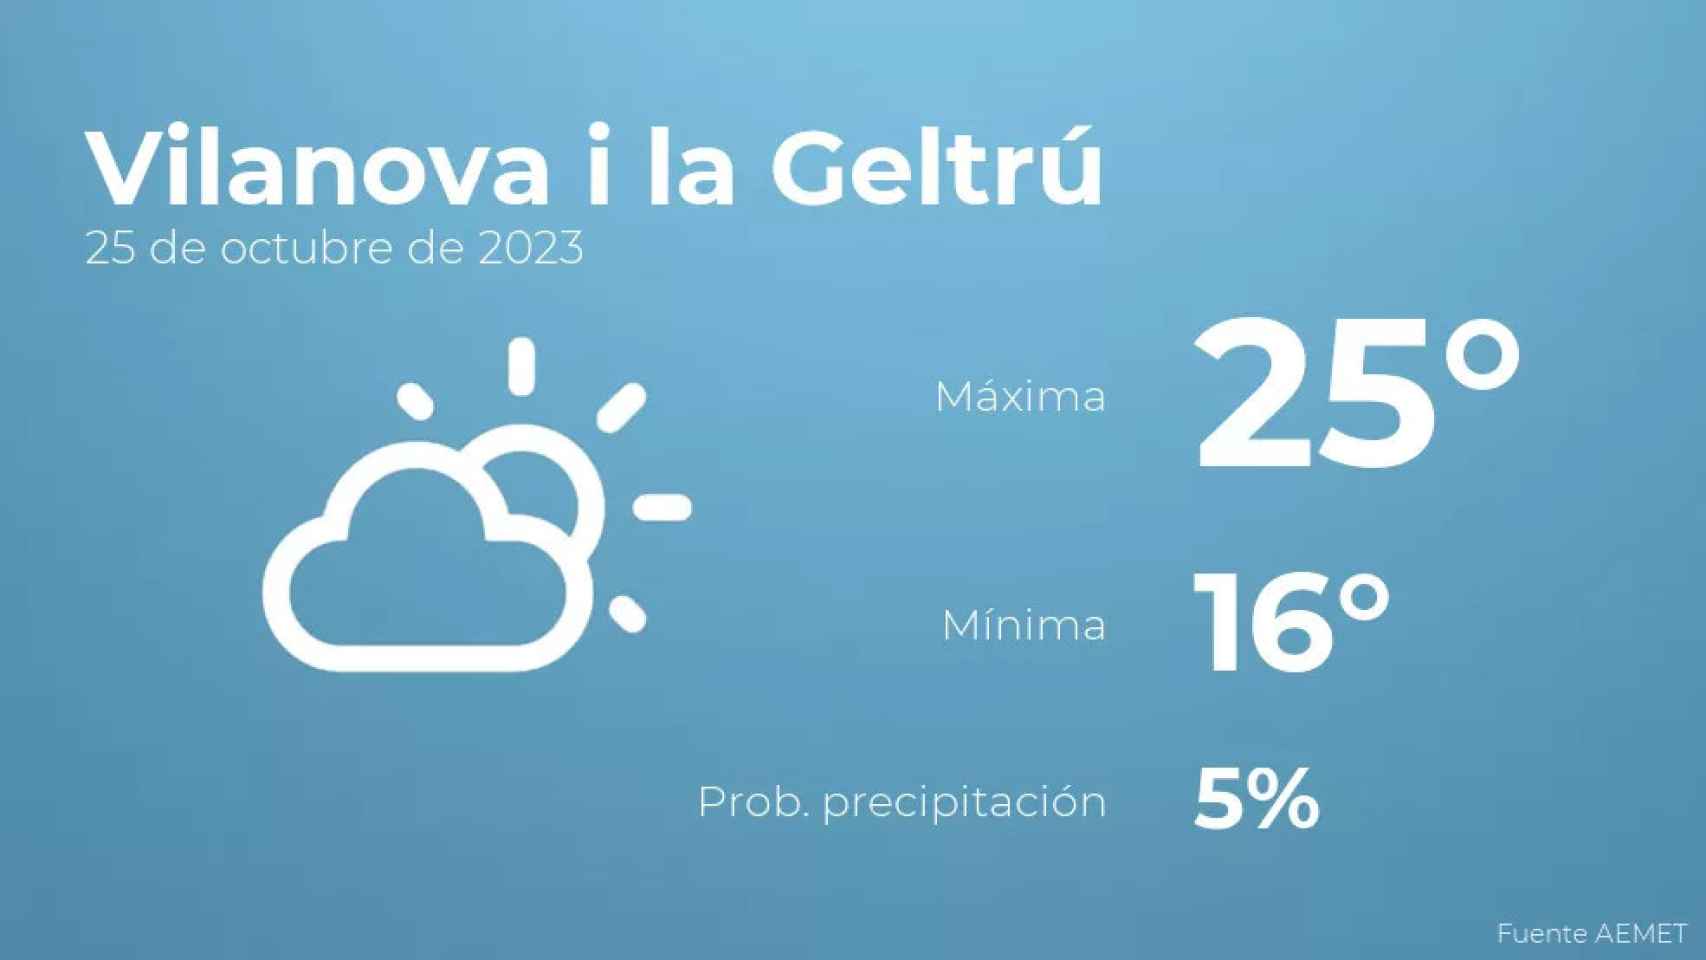 weather?weatherid=12&tempmax=25&tempmin=16&prep=5&city=Vilanova+i+la+Geltr%C3%BA&date=25+de+octubre+de+2023&client=CRG&data provider=aemet